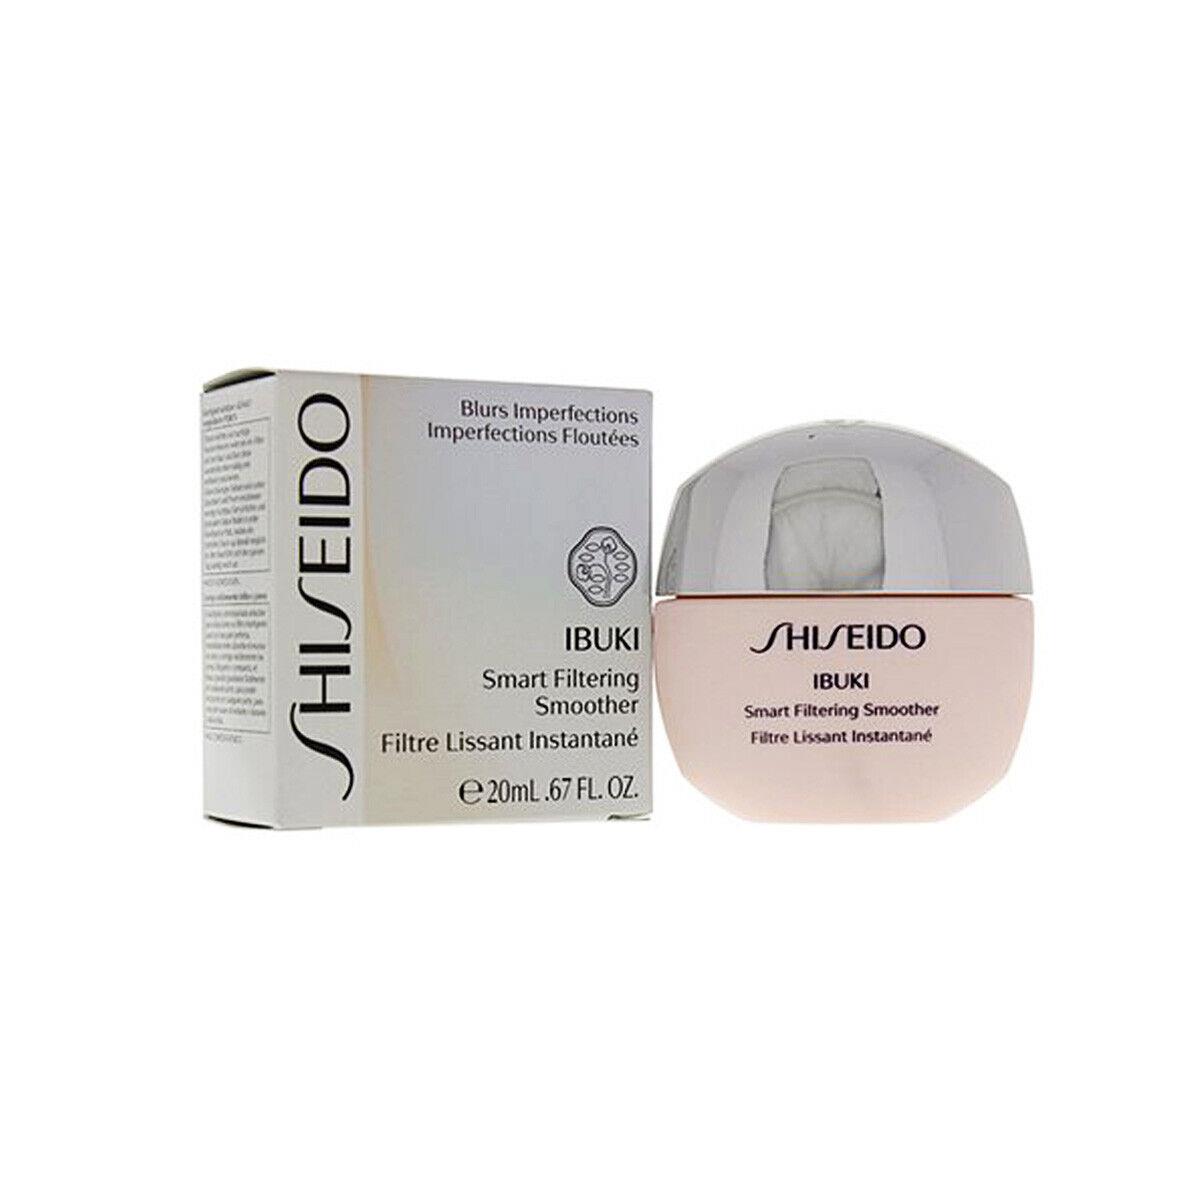 Shiseido Ibuki Smart Filtering Smoother - Full Size 20mL / 0.67 Oz